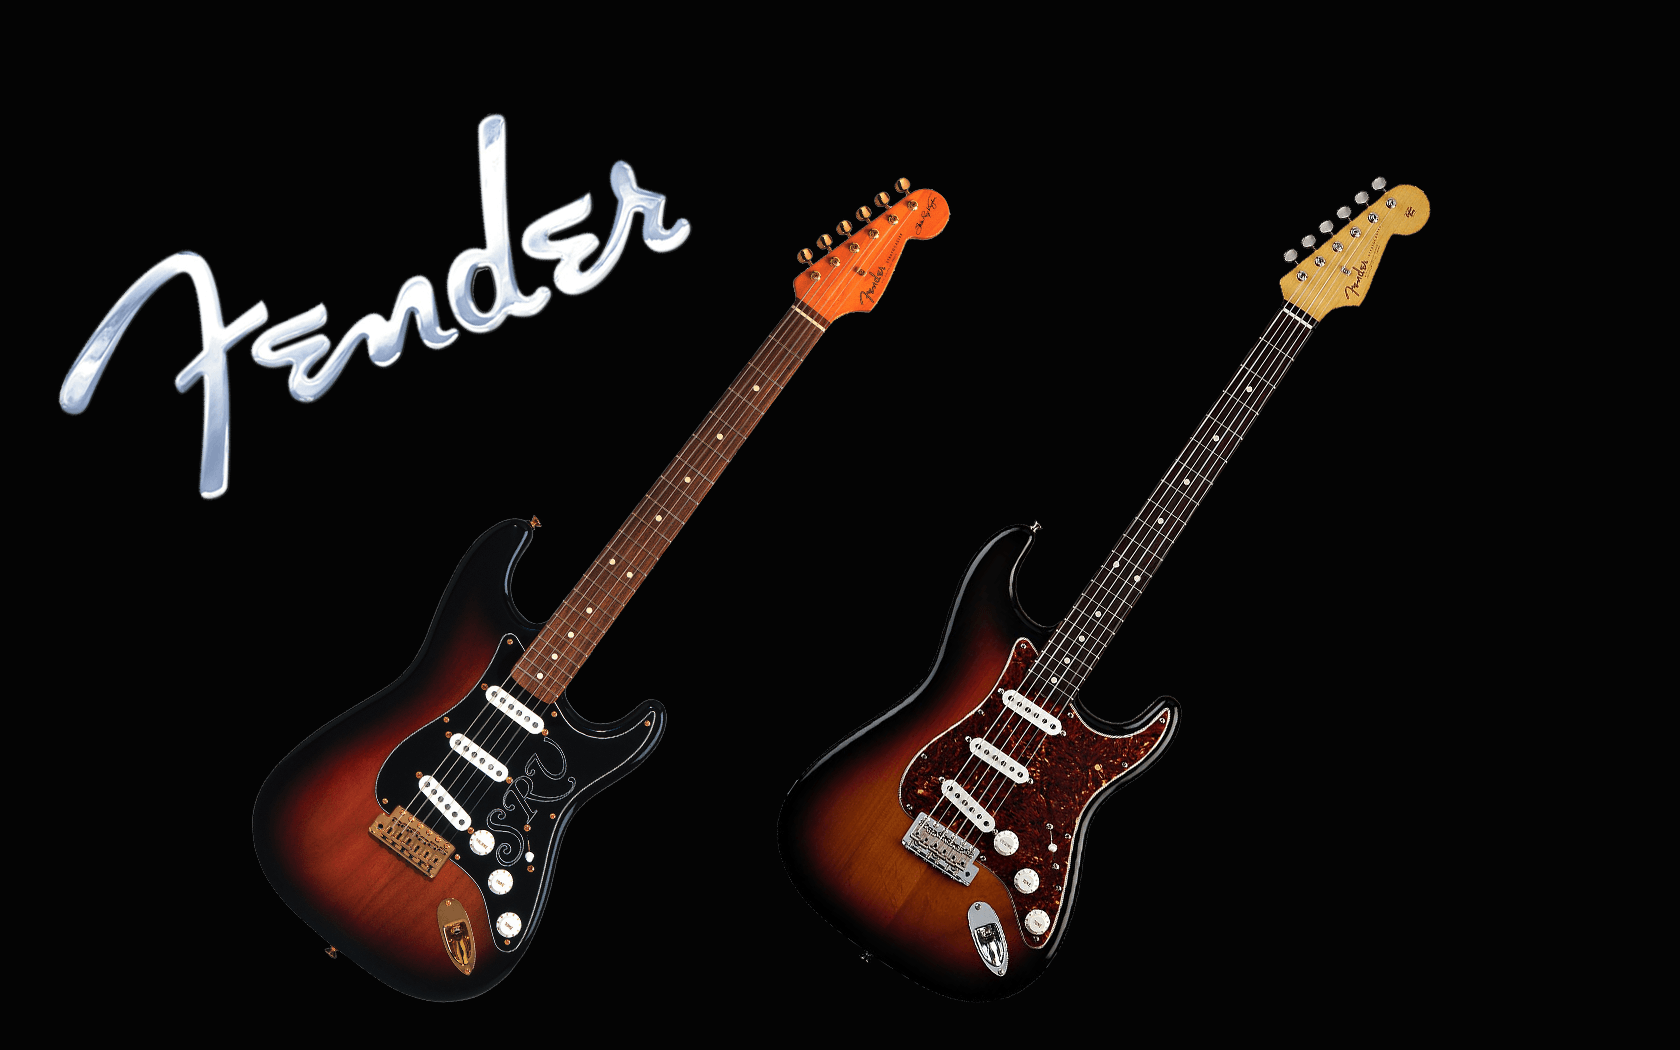 Fender Guitar Wallpaper. Free Wallpaper